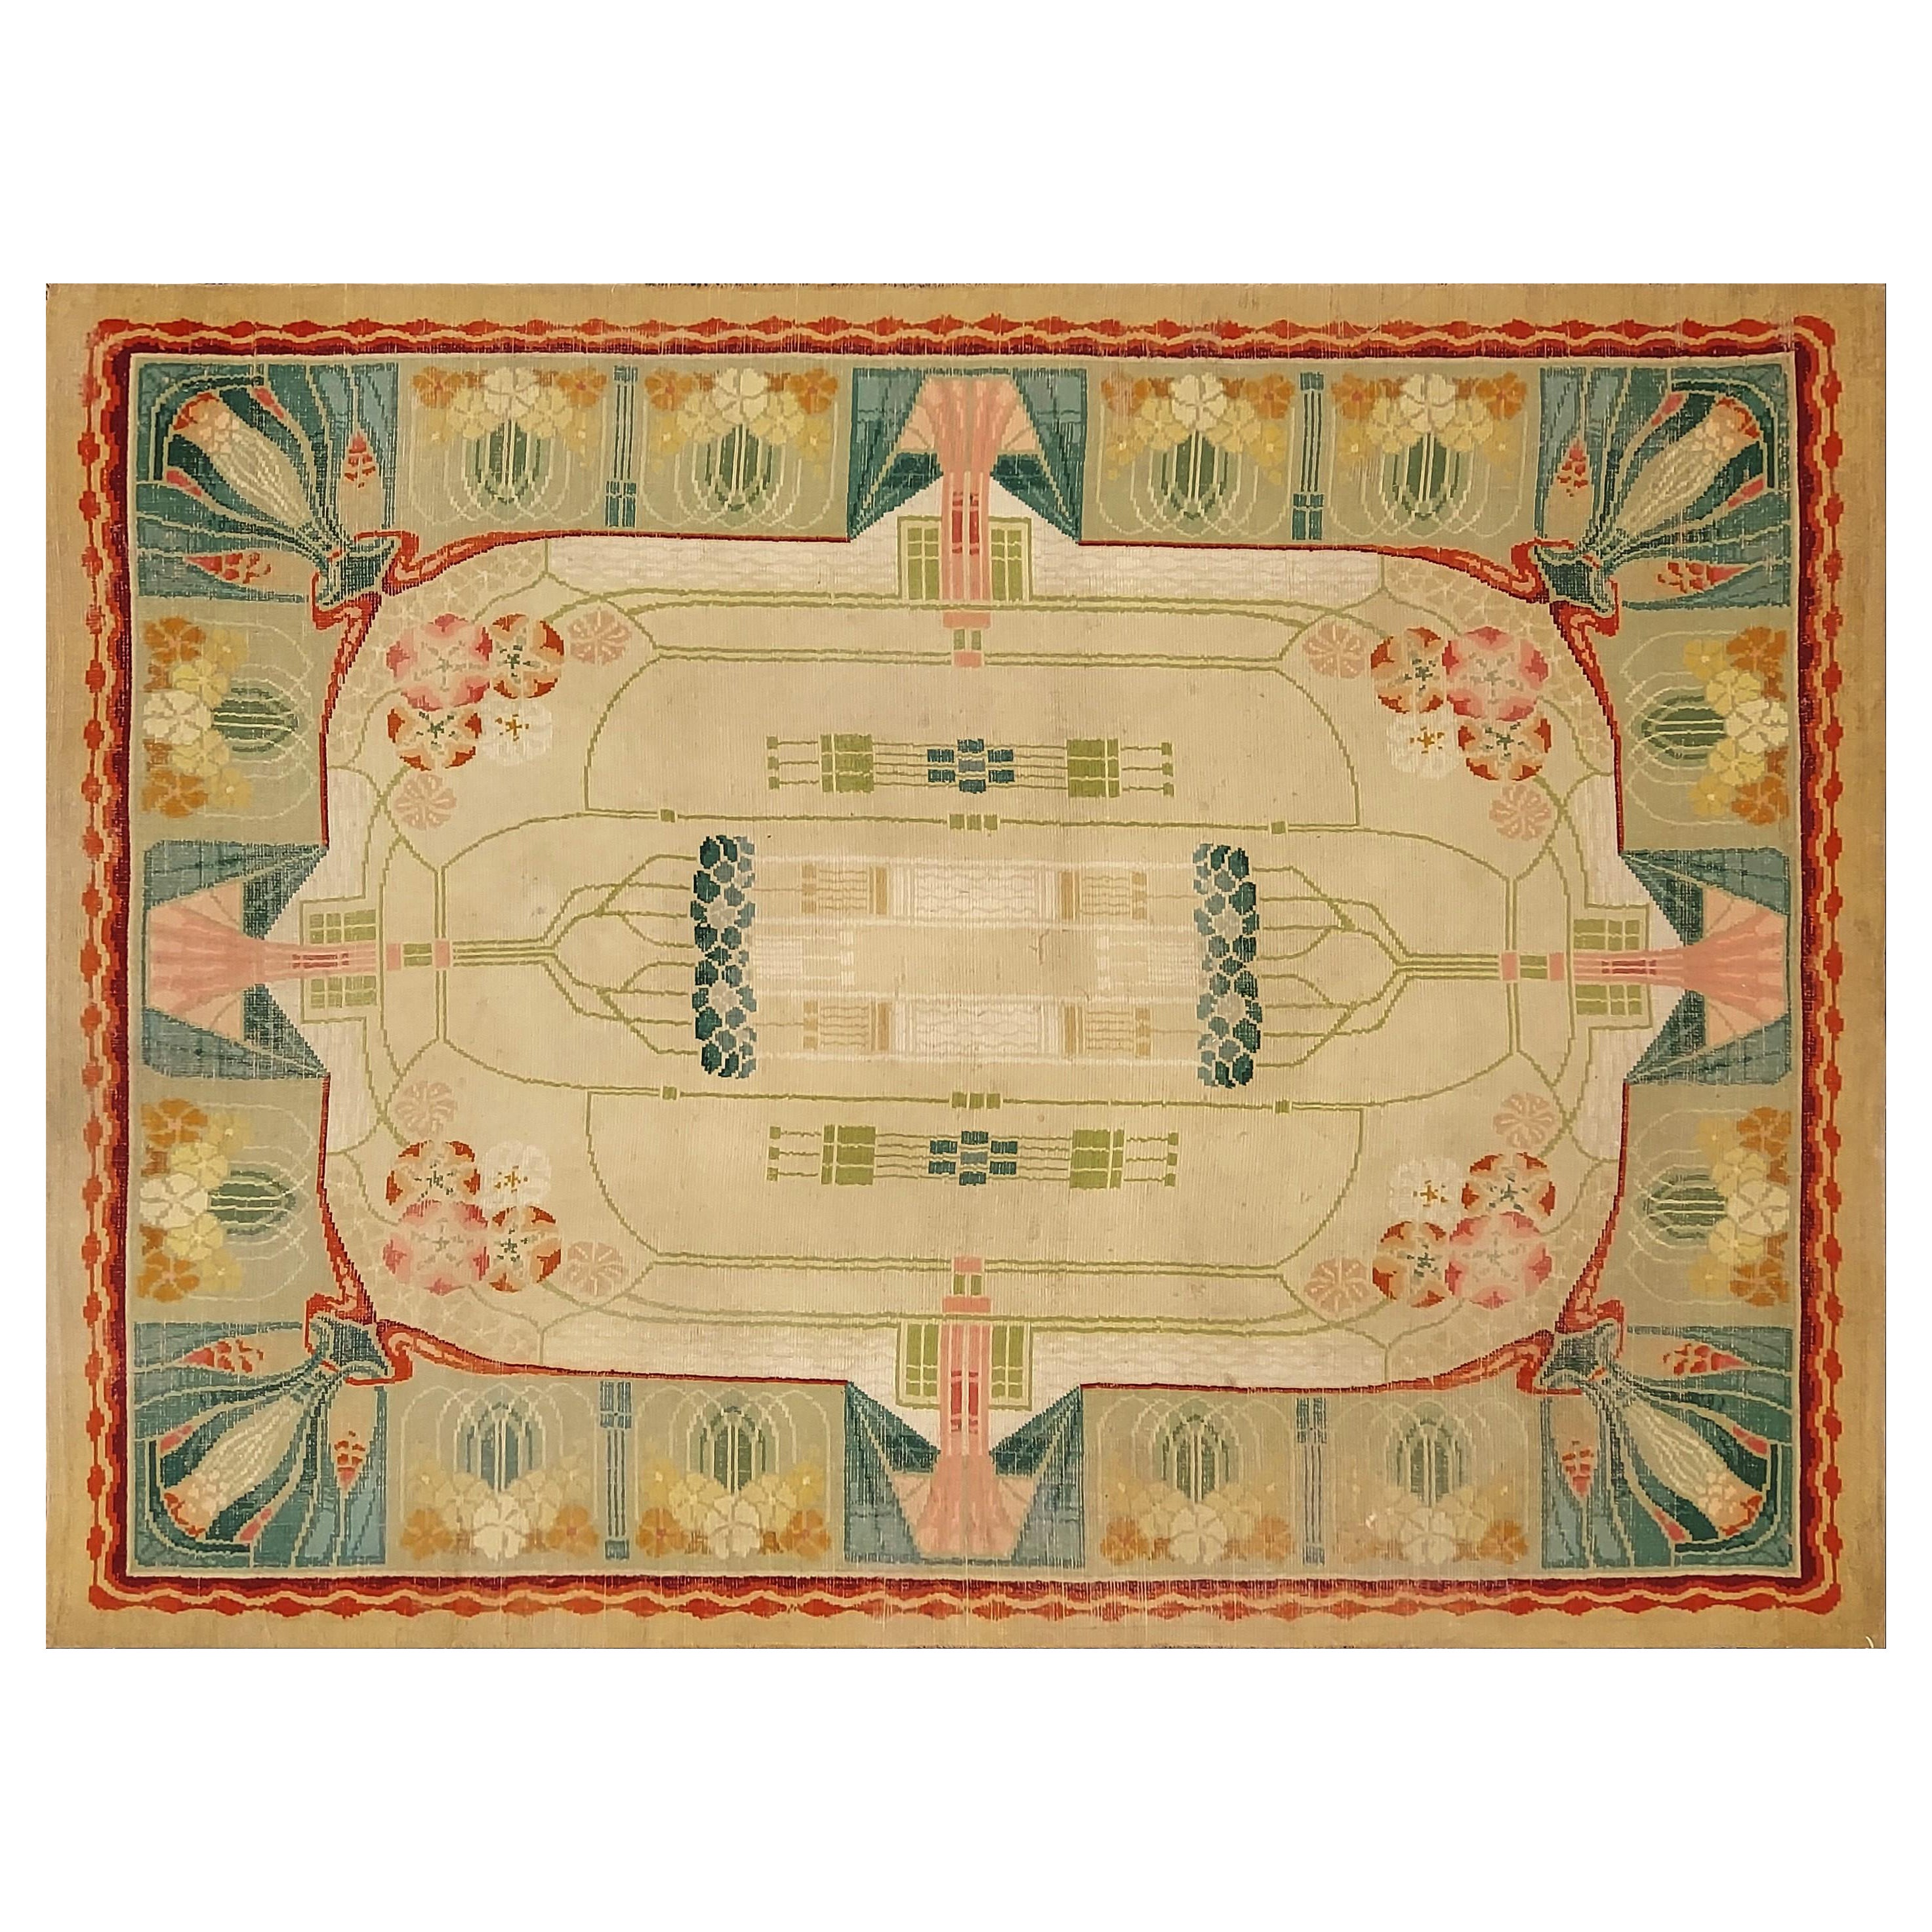 European Art Nouveau Rug, Attributed to Designer Gustave Serrurier-Bovy  For Sale